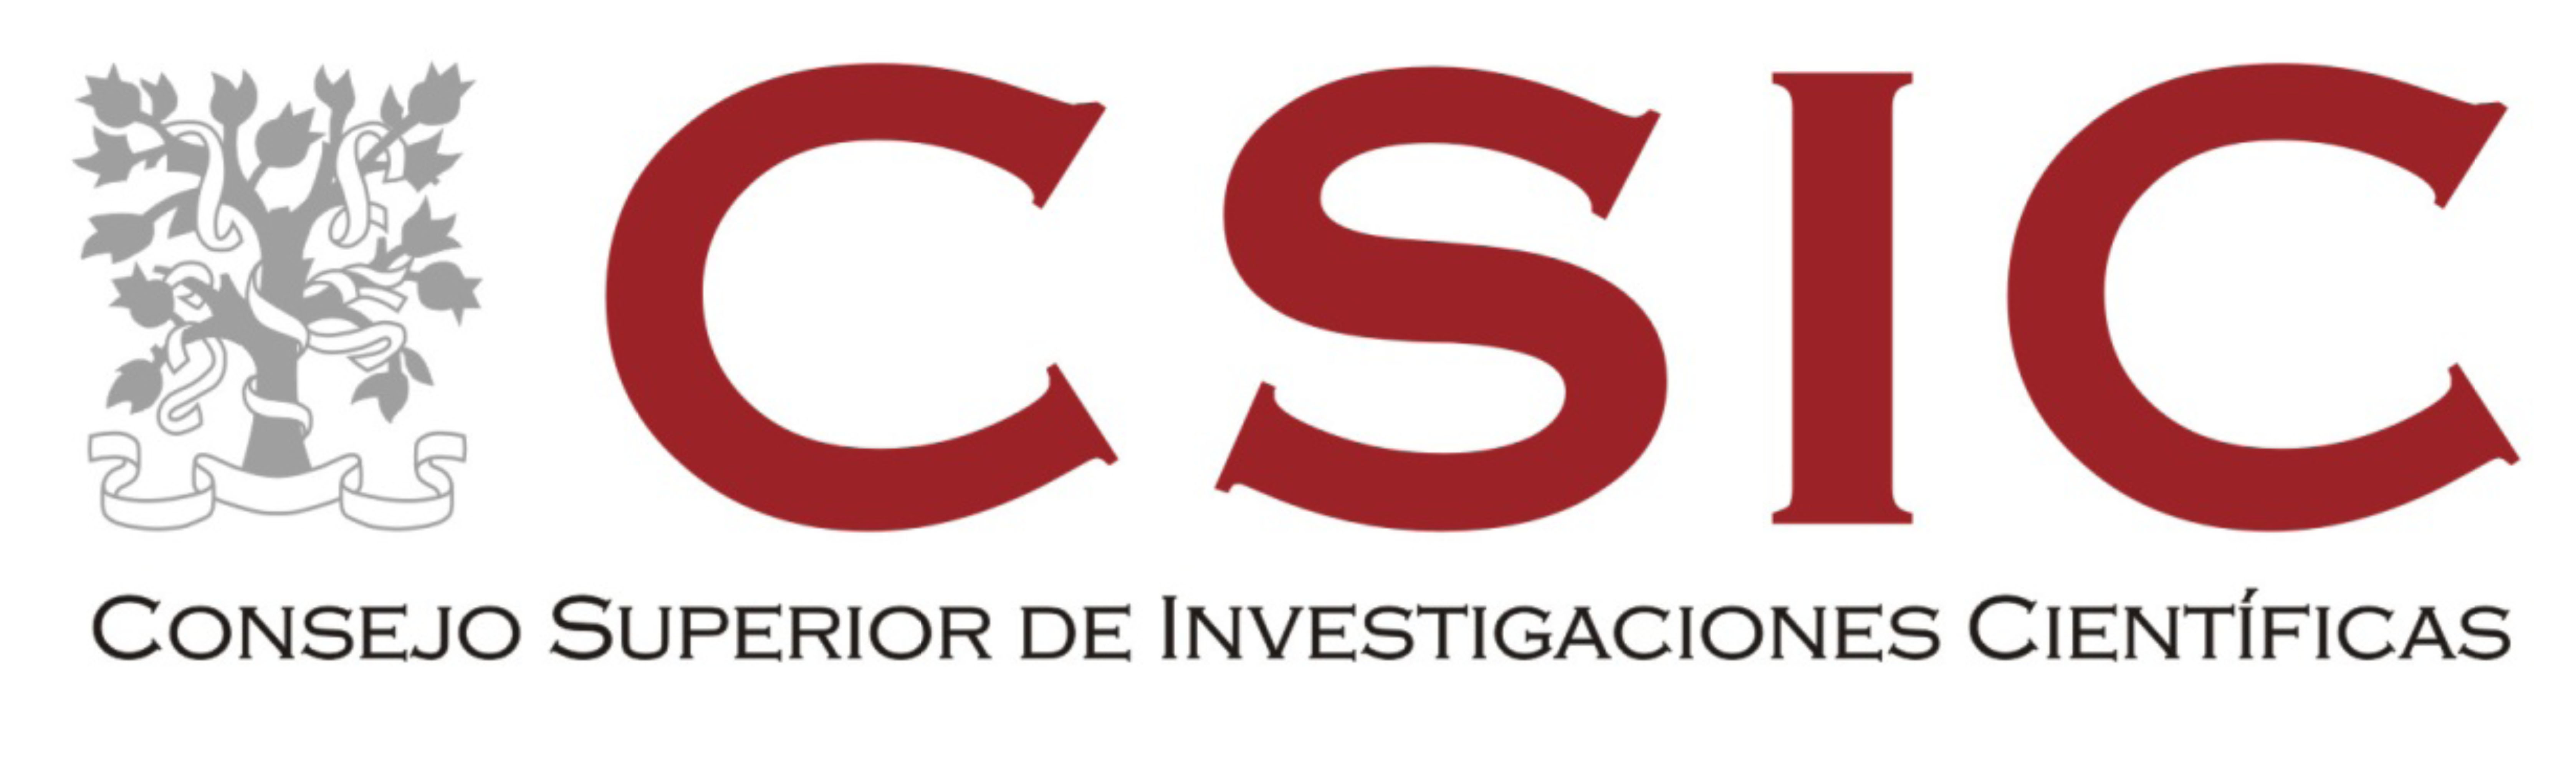 Consejo superior de investigac iones cien tíficas ( C.S.I.C )